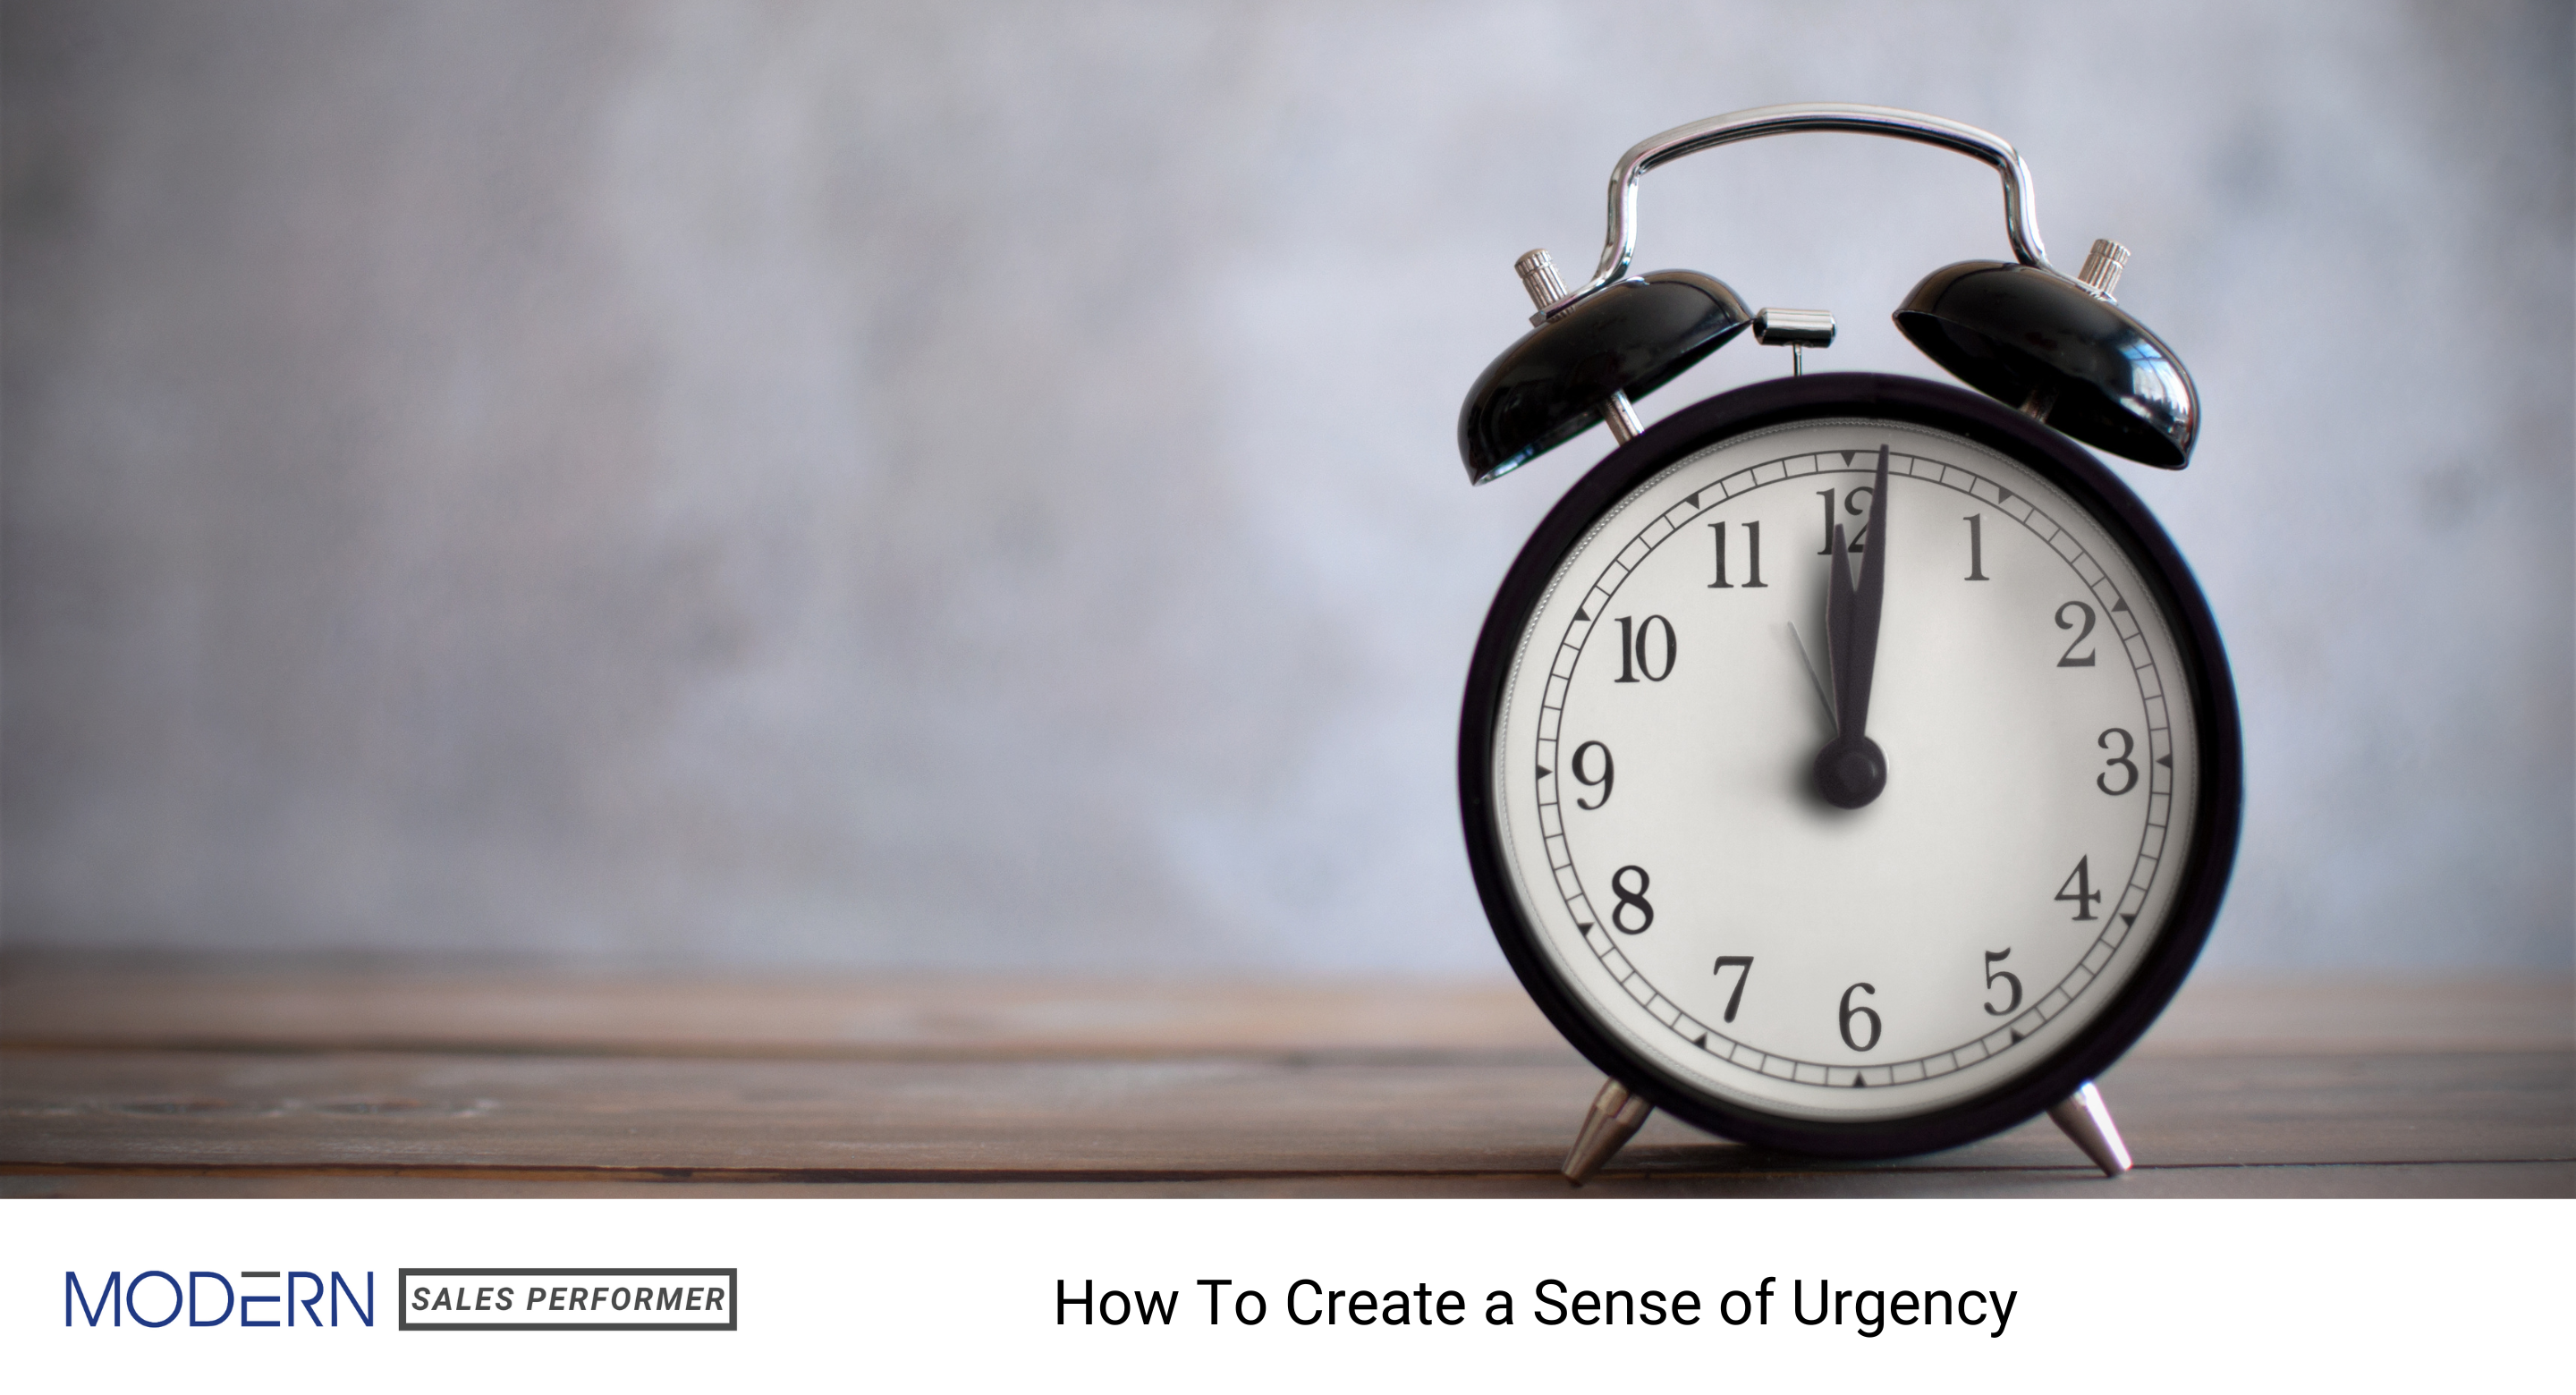 Create a Sense of Urgency Sales In 21 Days